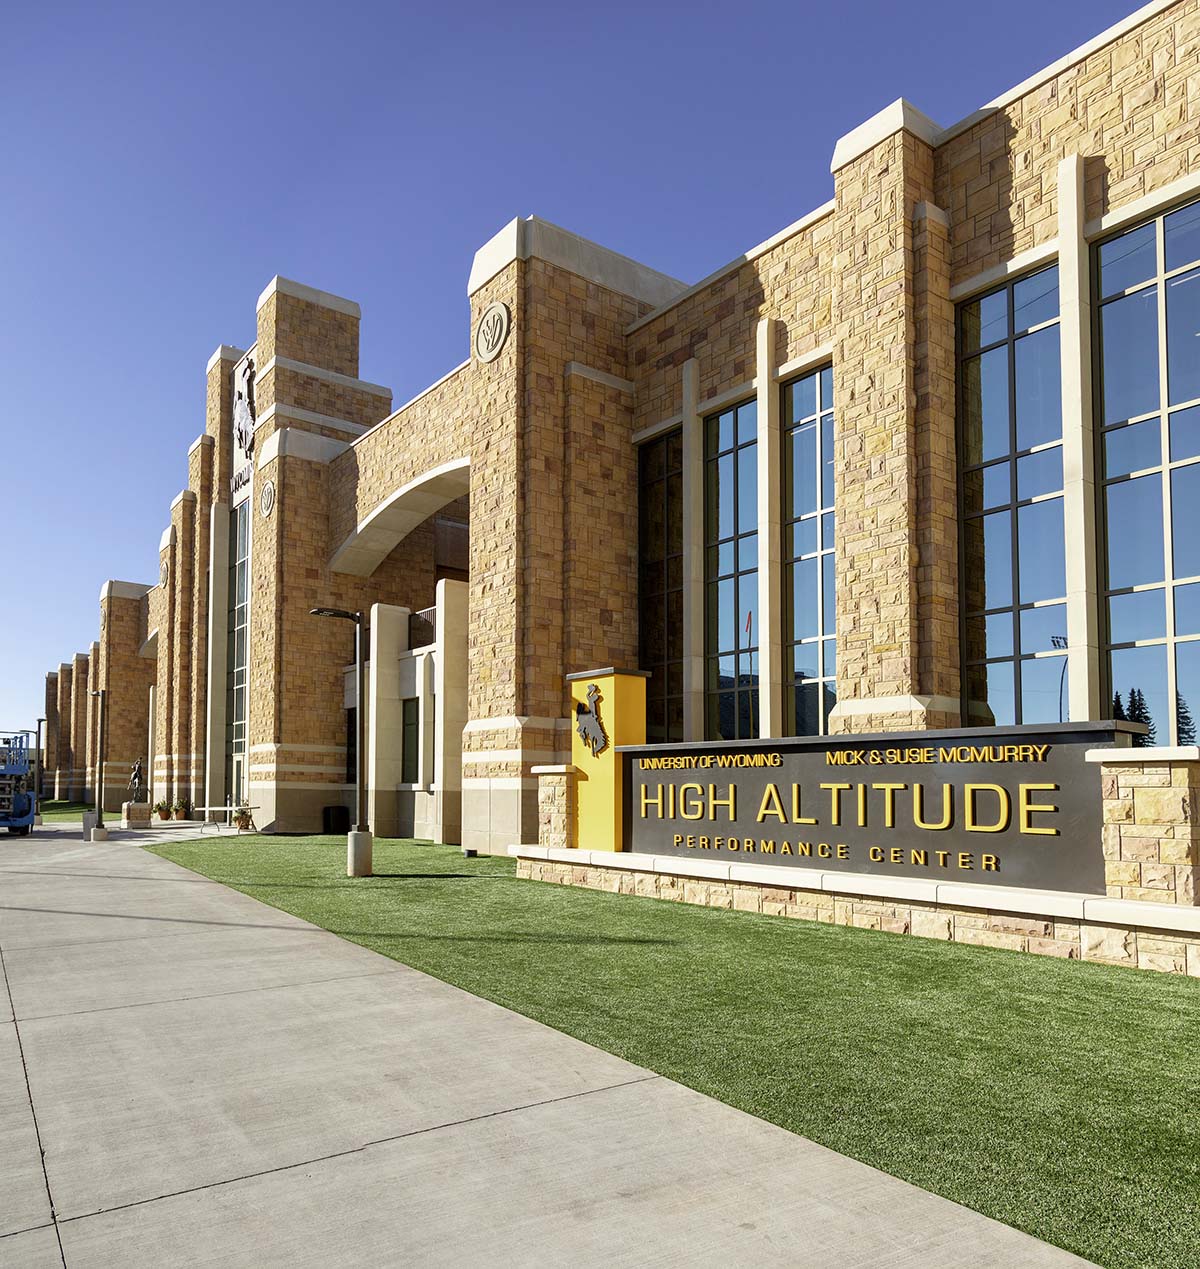 University of Wyoming Athletics performance center exterior signage